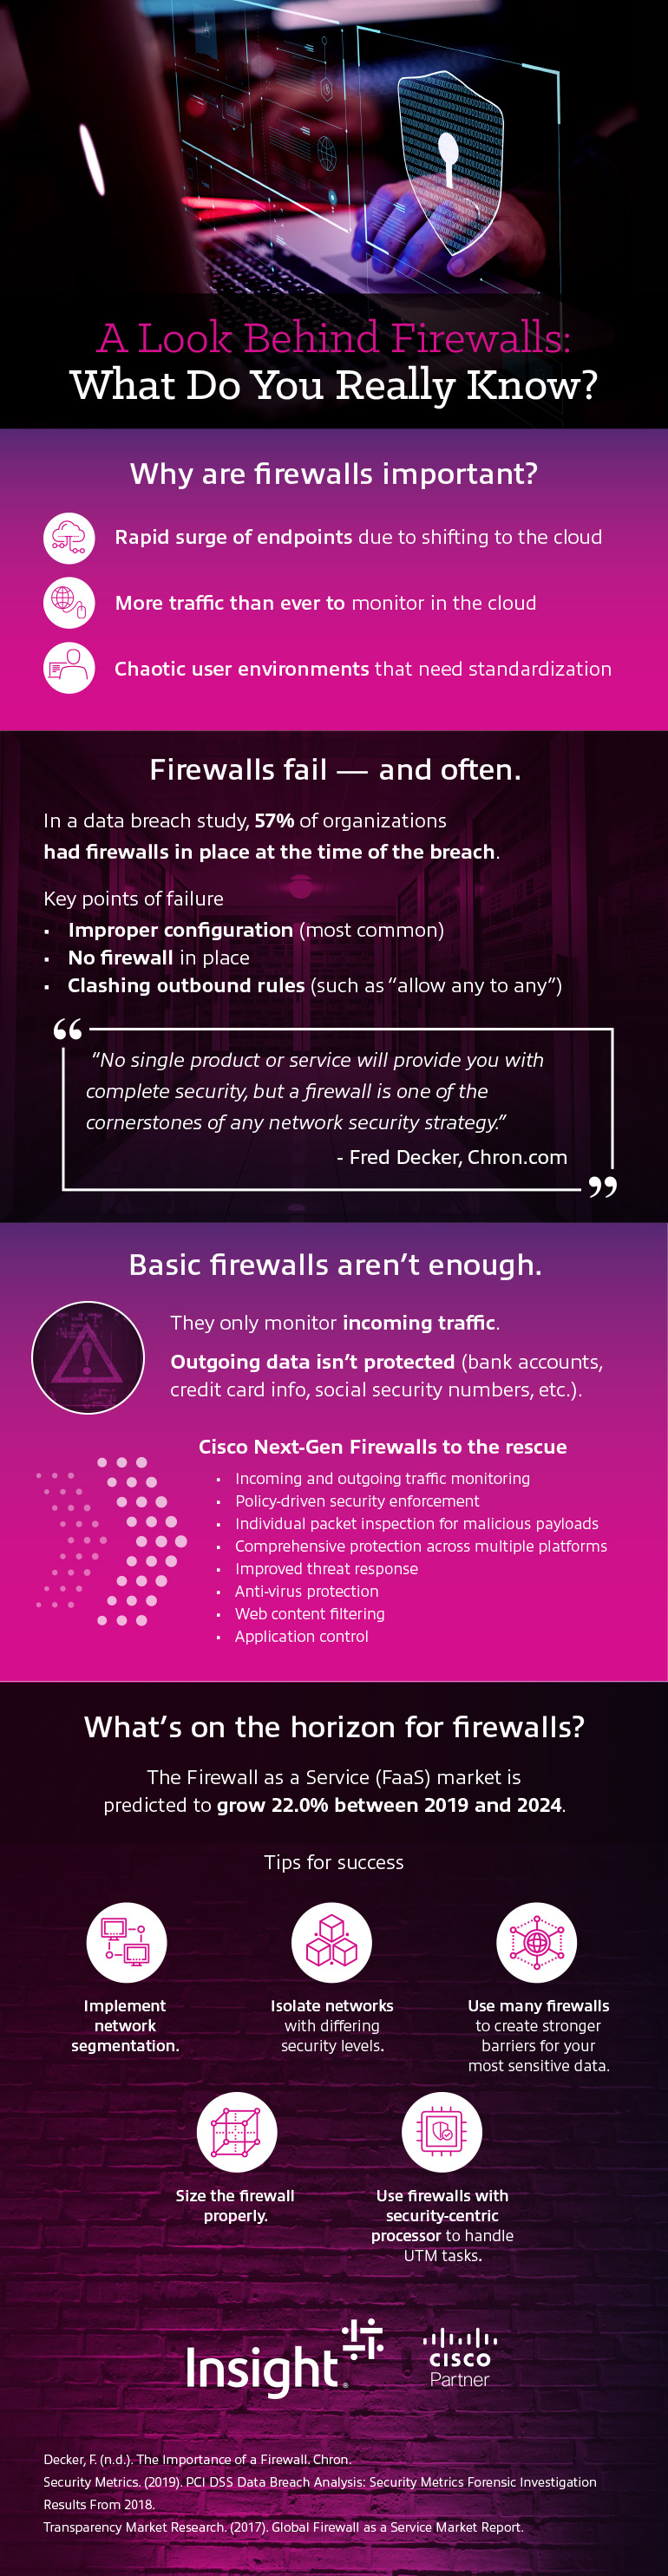 Cisco Next-Generation Firewalls infographic